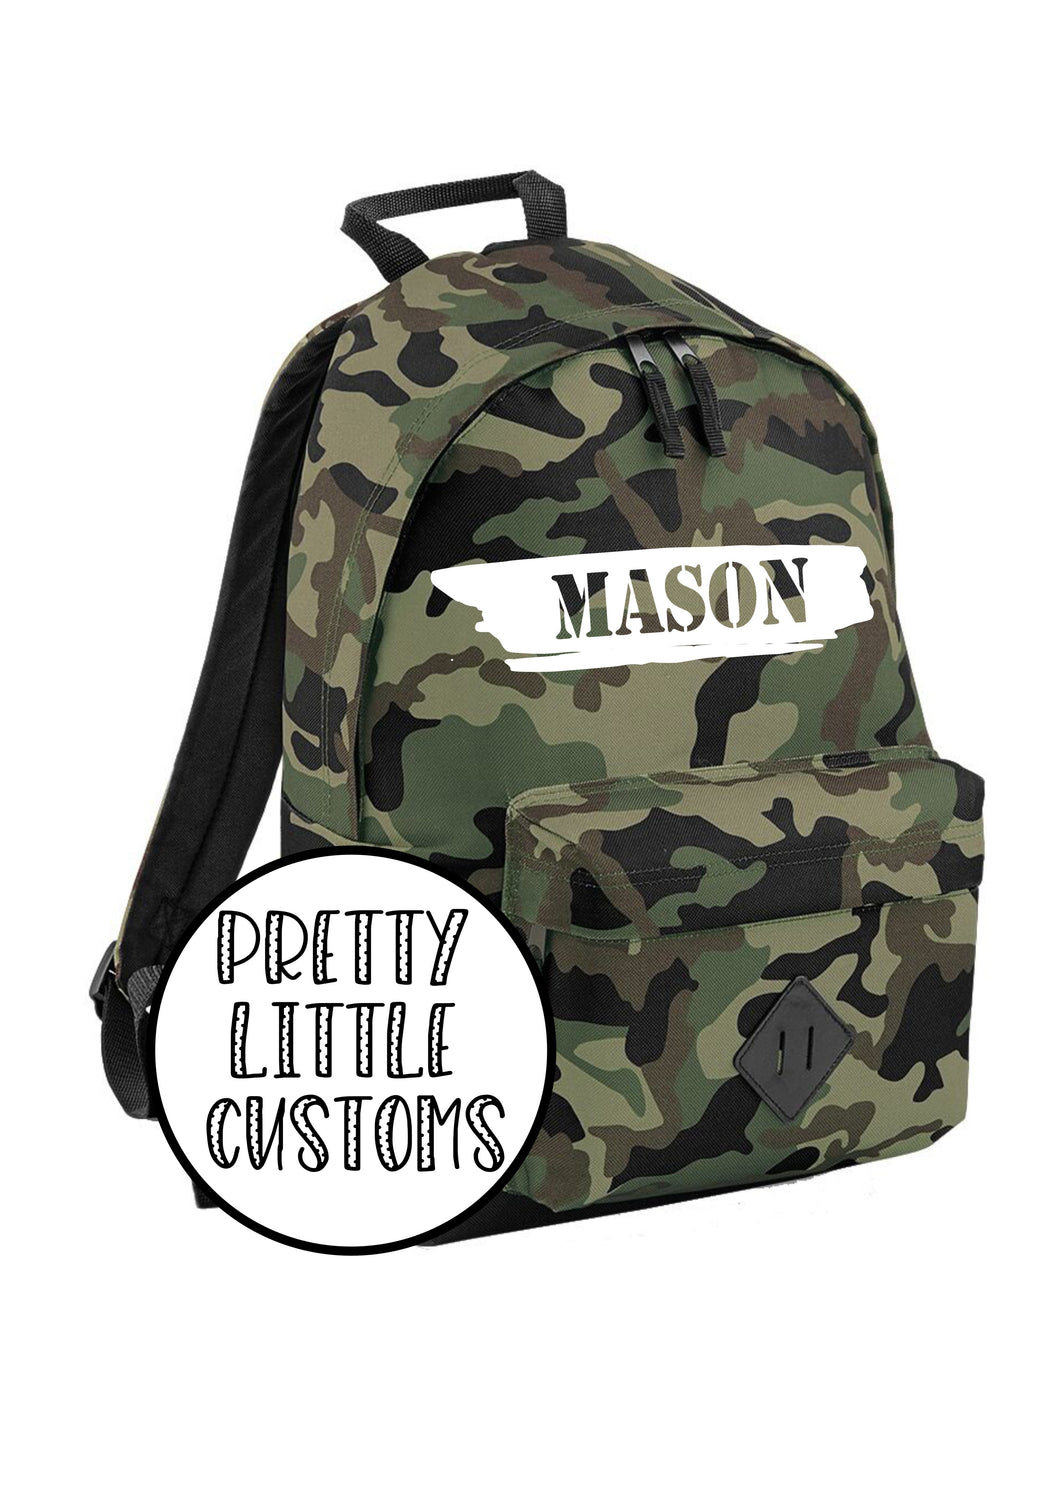 Personalised kids name rucksack/backpack/school bag - camo - style 2